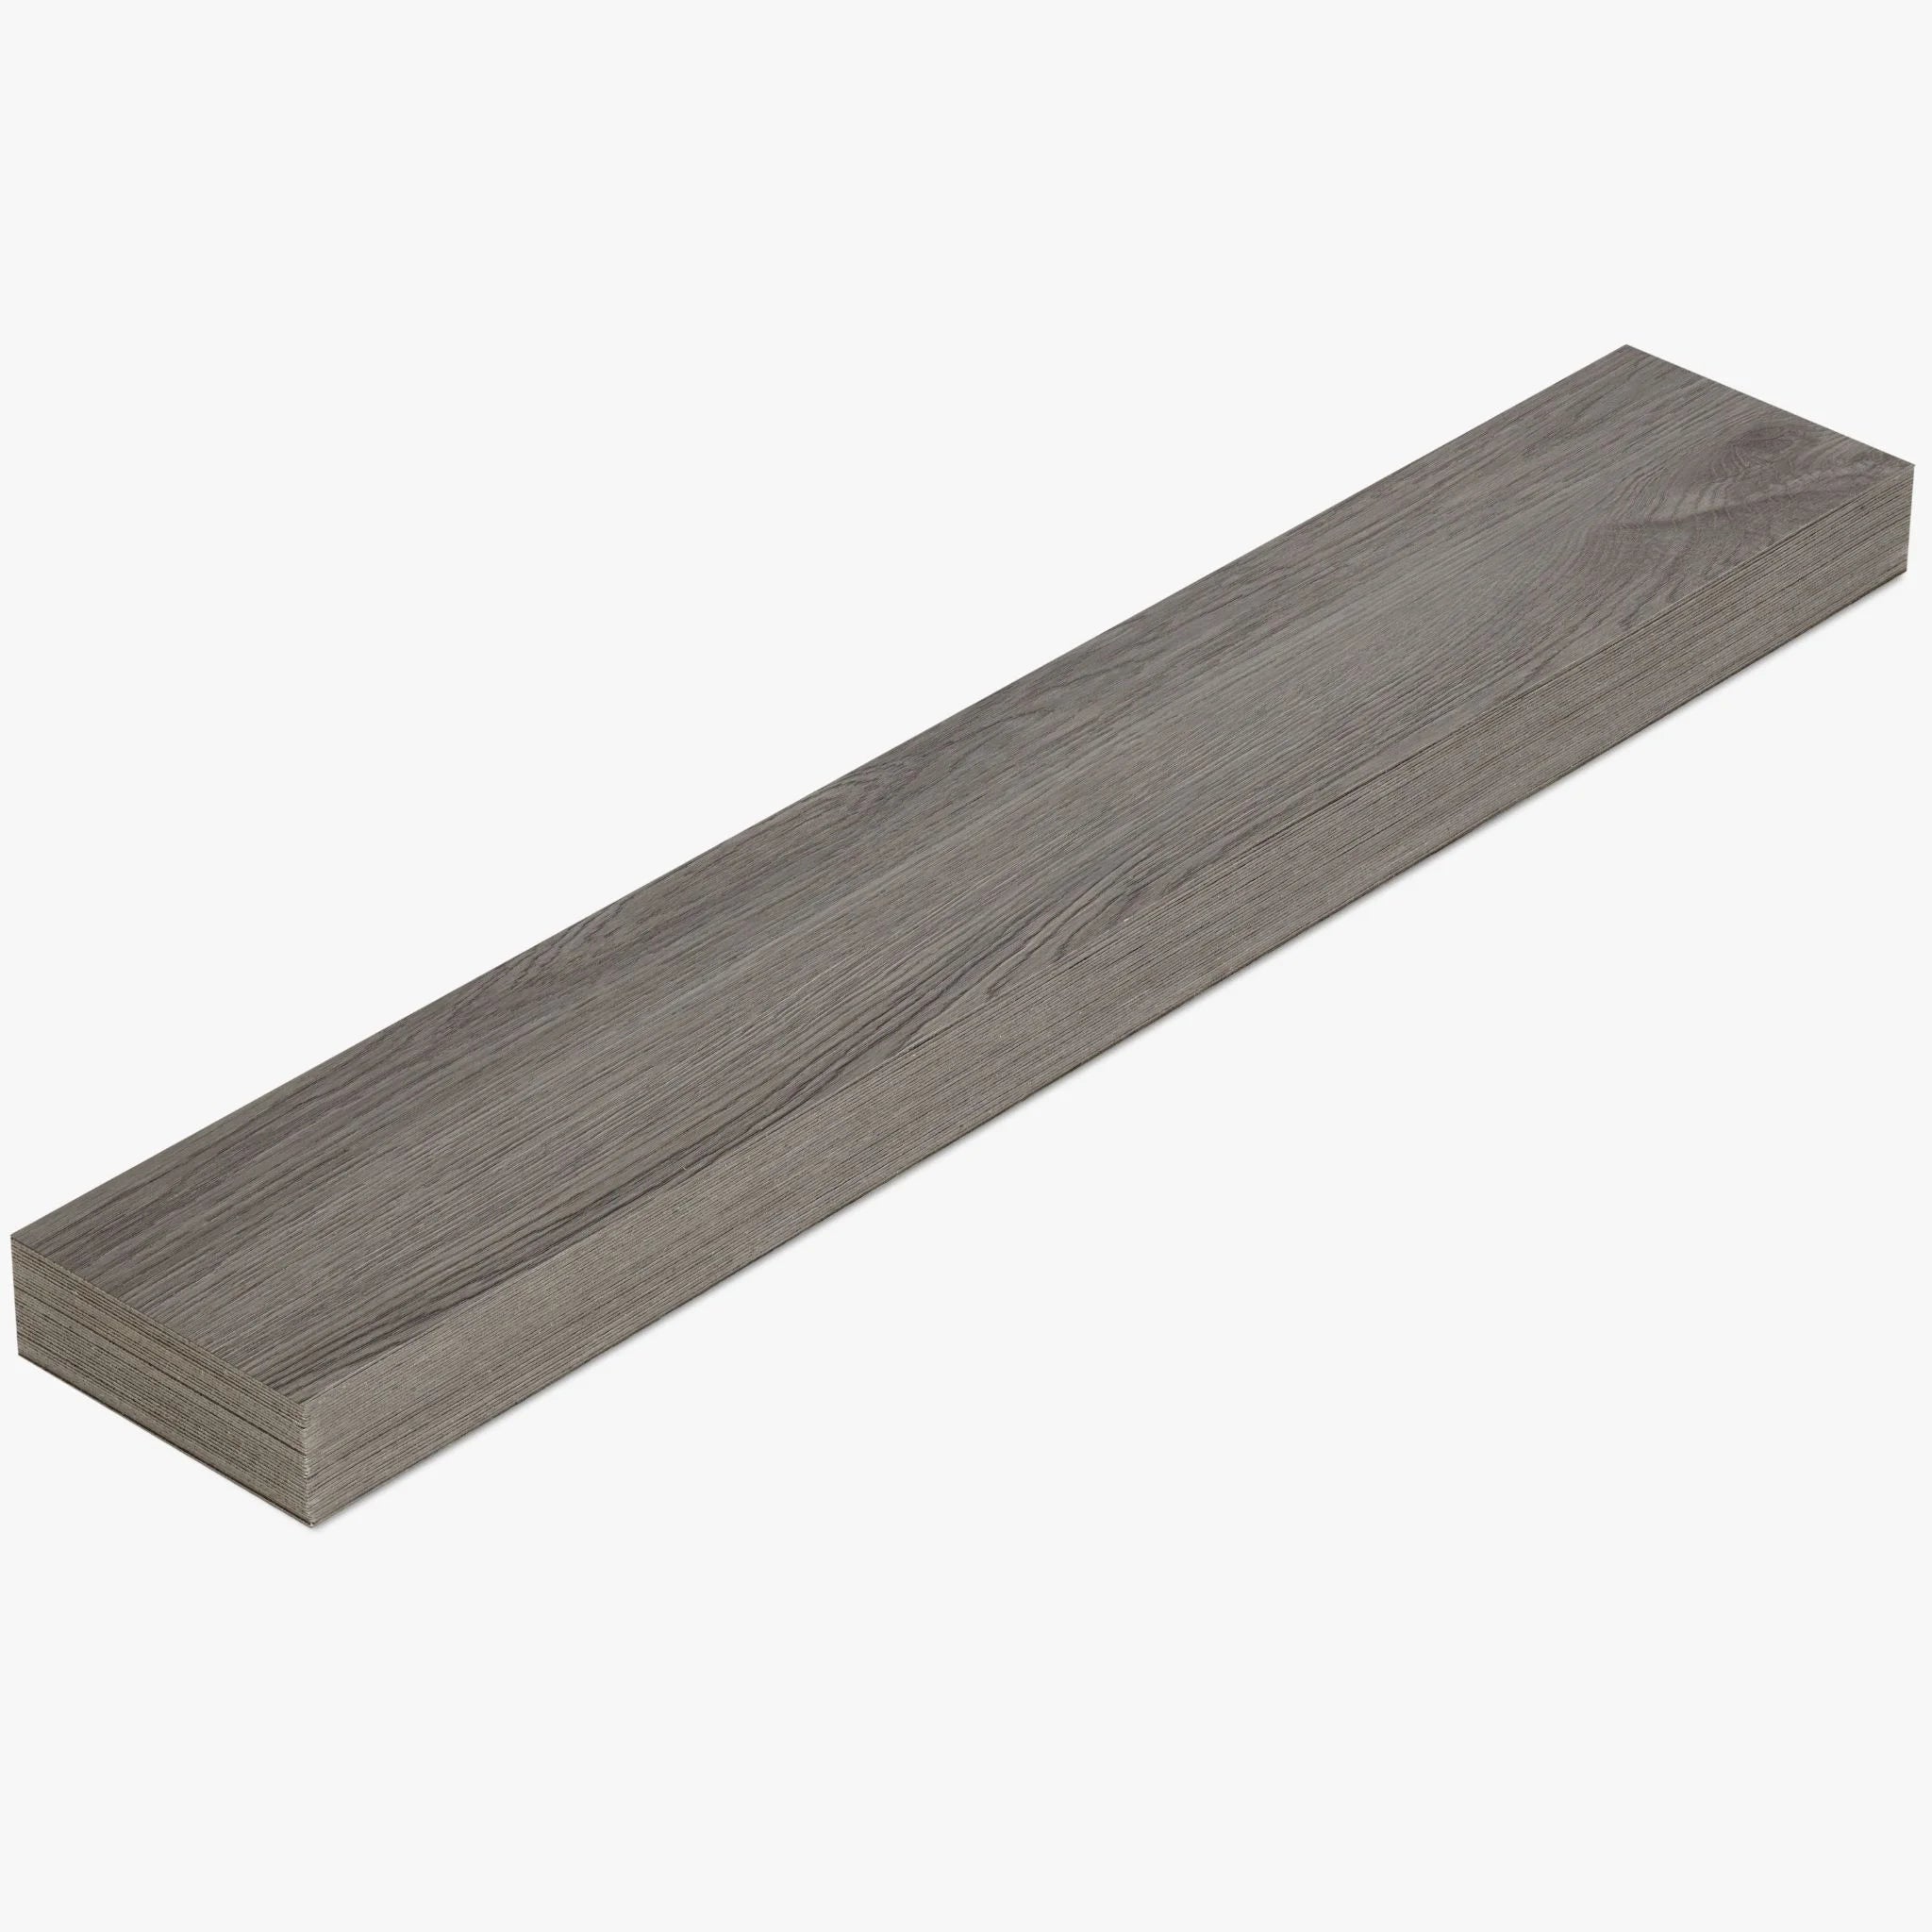 detailed view of dark grey wood-effect vinyl flooring with subtle grain patterns